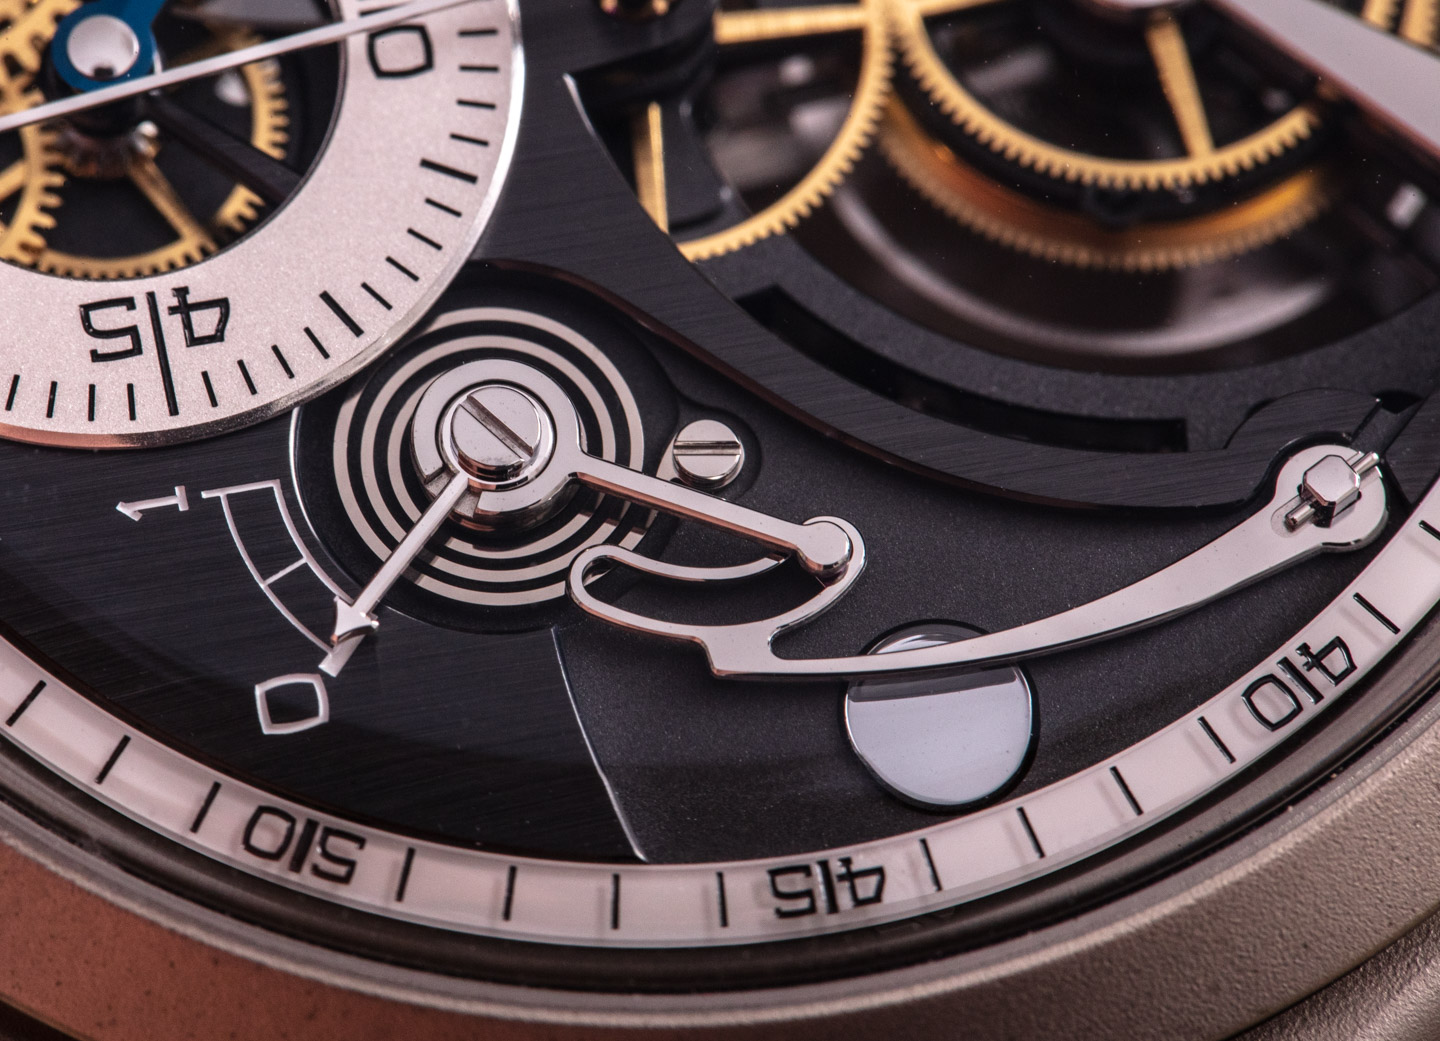 动手首次亮相：Ferdinand Berthoud Chronometre FB RS Skeleton Watch